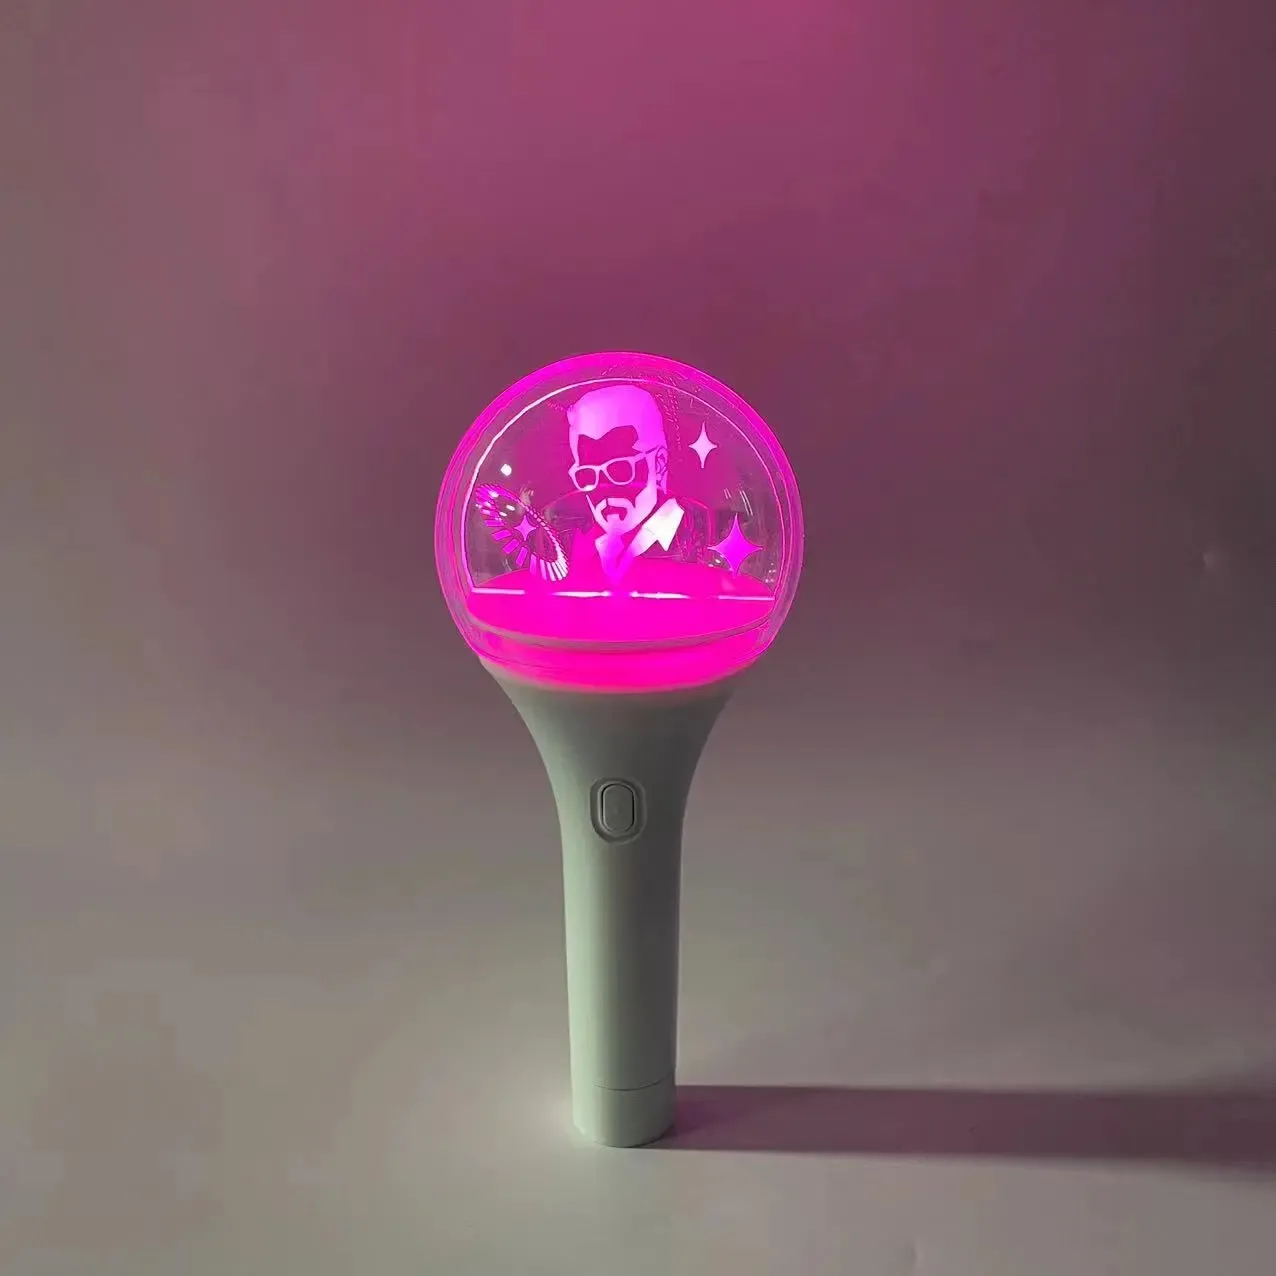 Korea Japan k-pop light stick 15colors changing 3D rotation DMX512 remote control light stick for concert